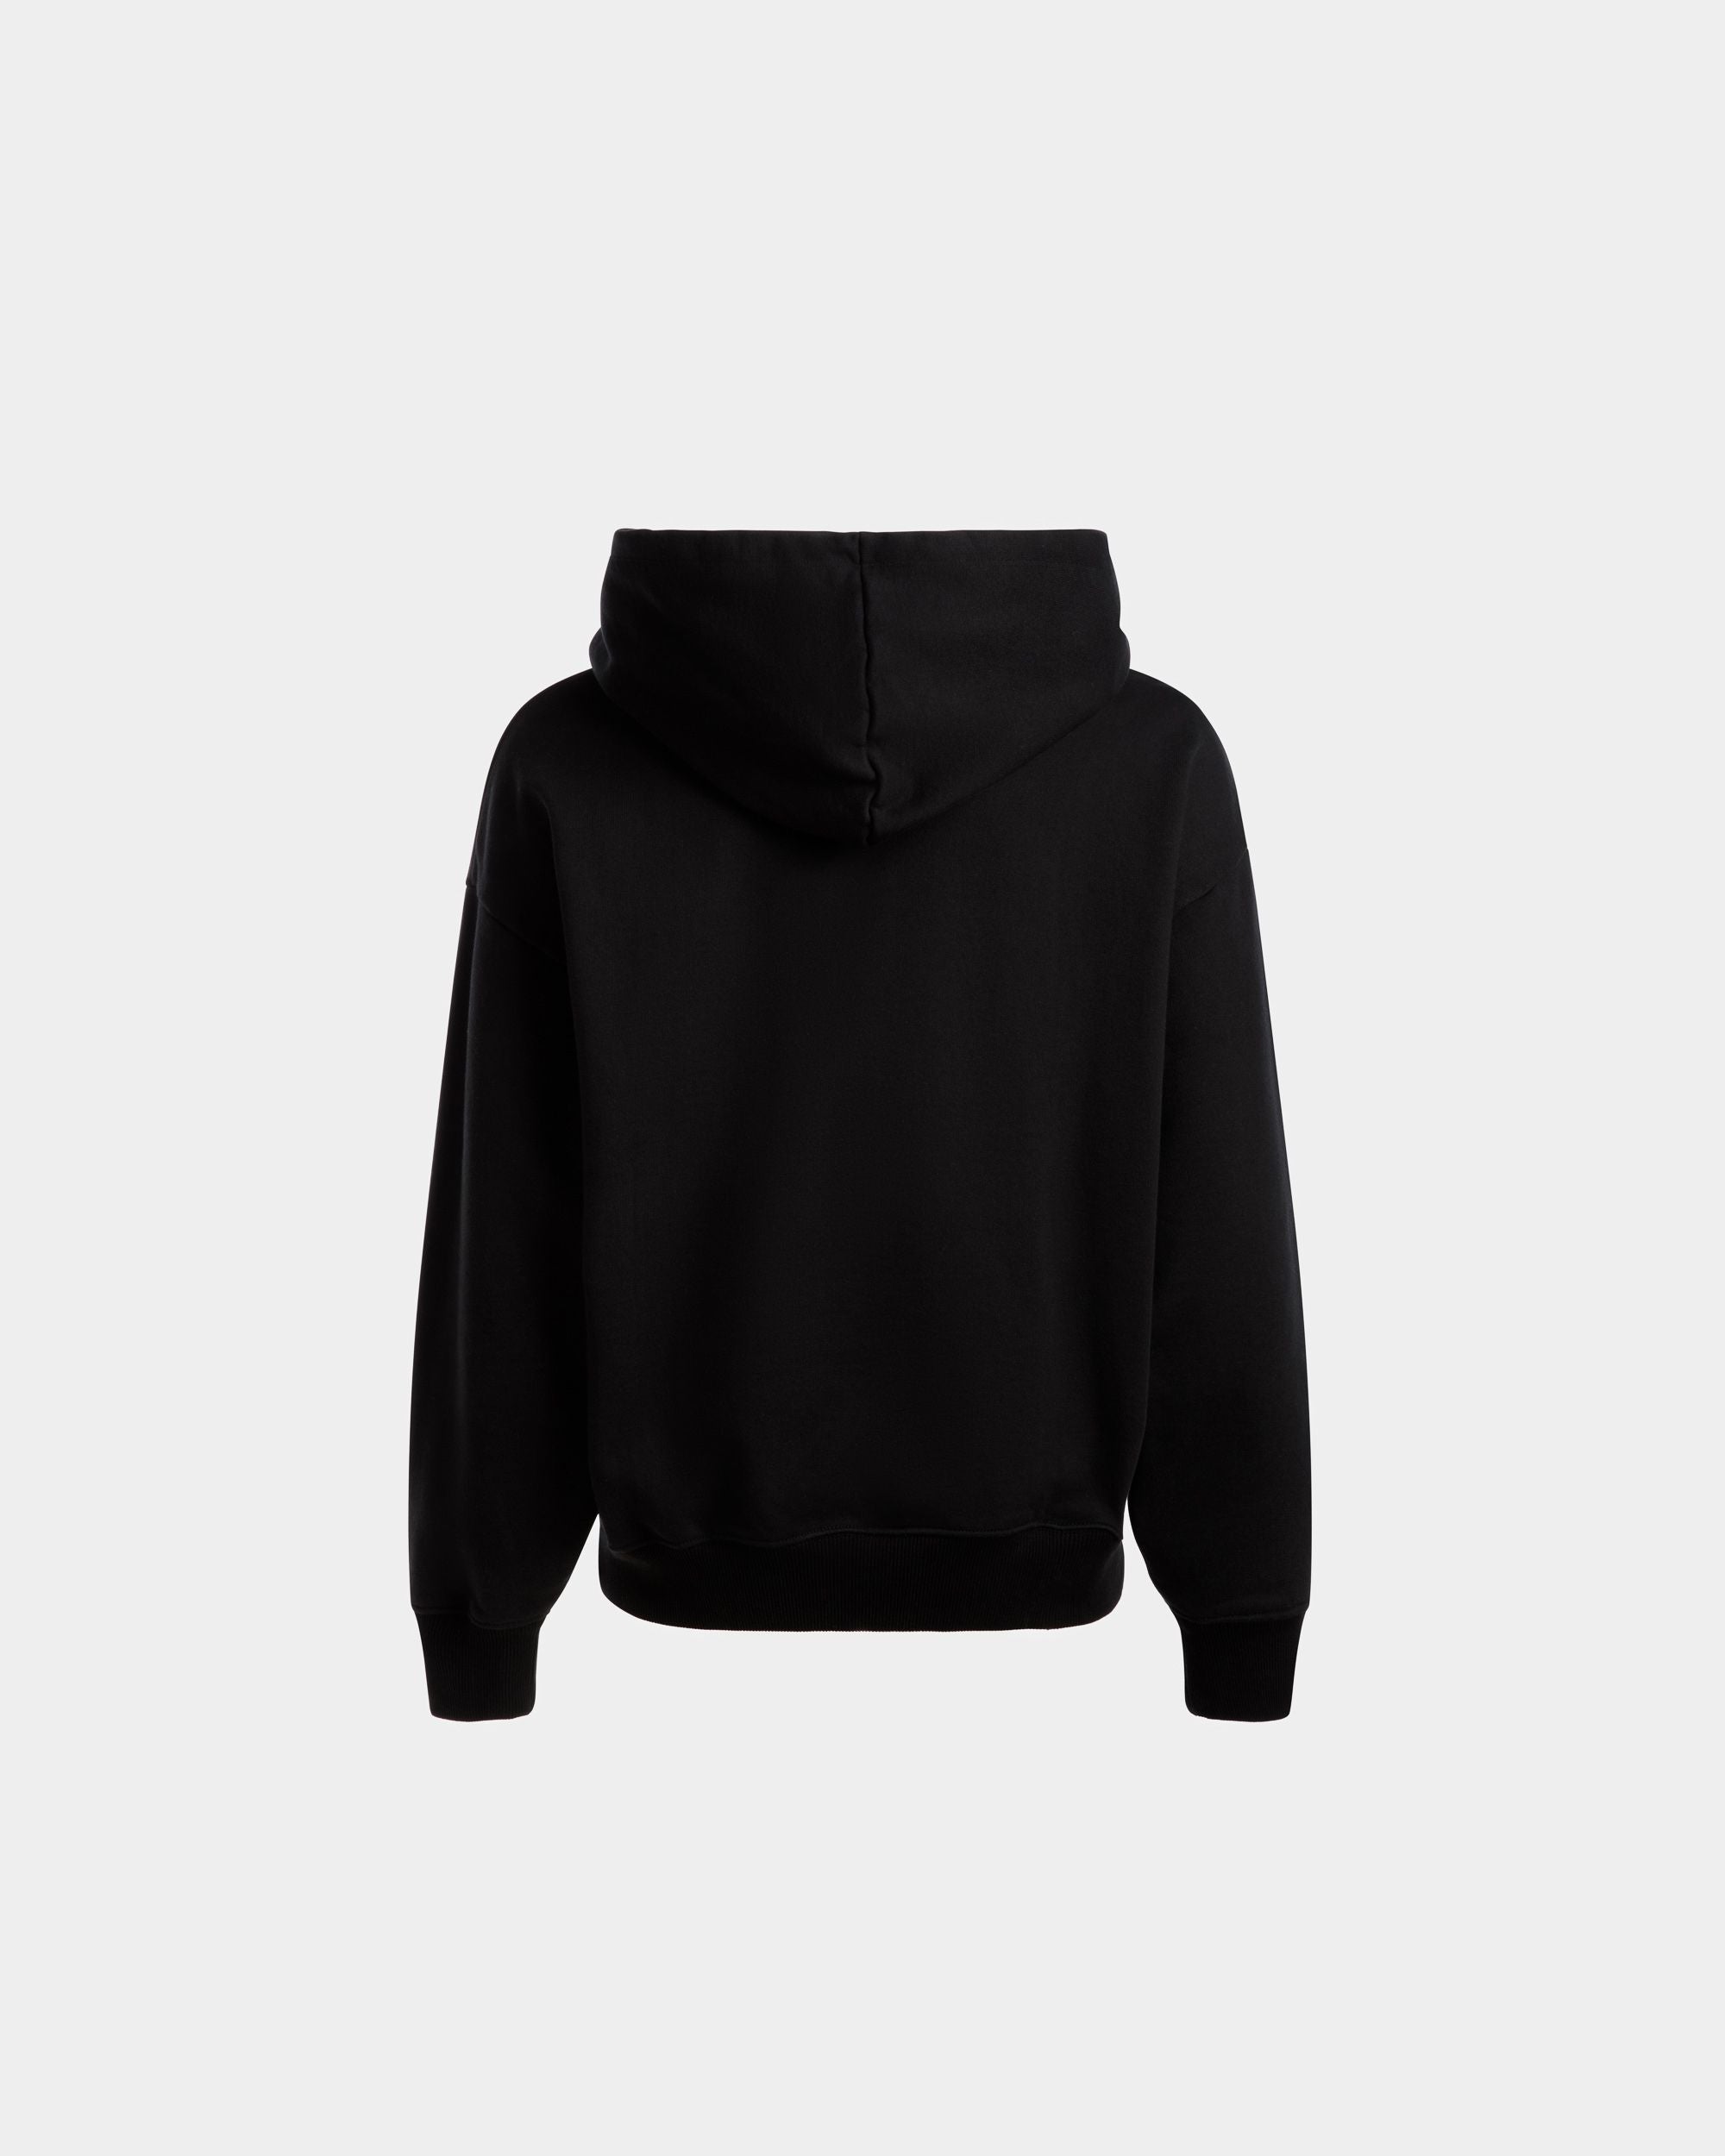 Logo Hooded Sweatshirt | Men's Sweatshirt | Black Cotton | Bally | Still Life Back